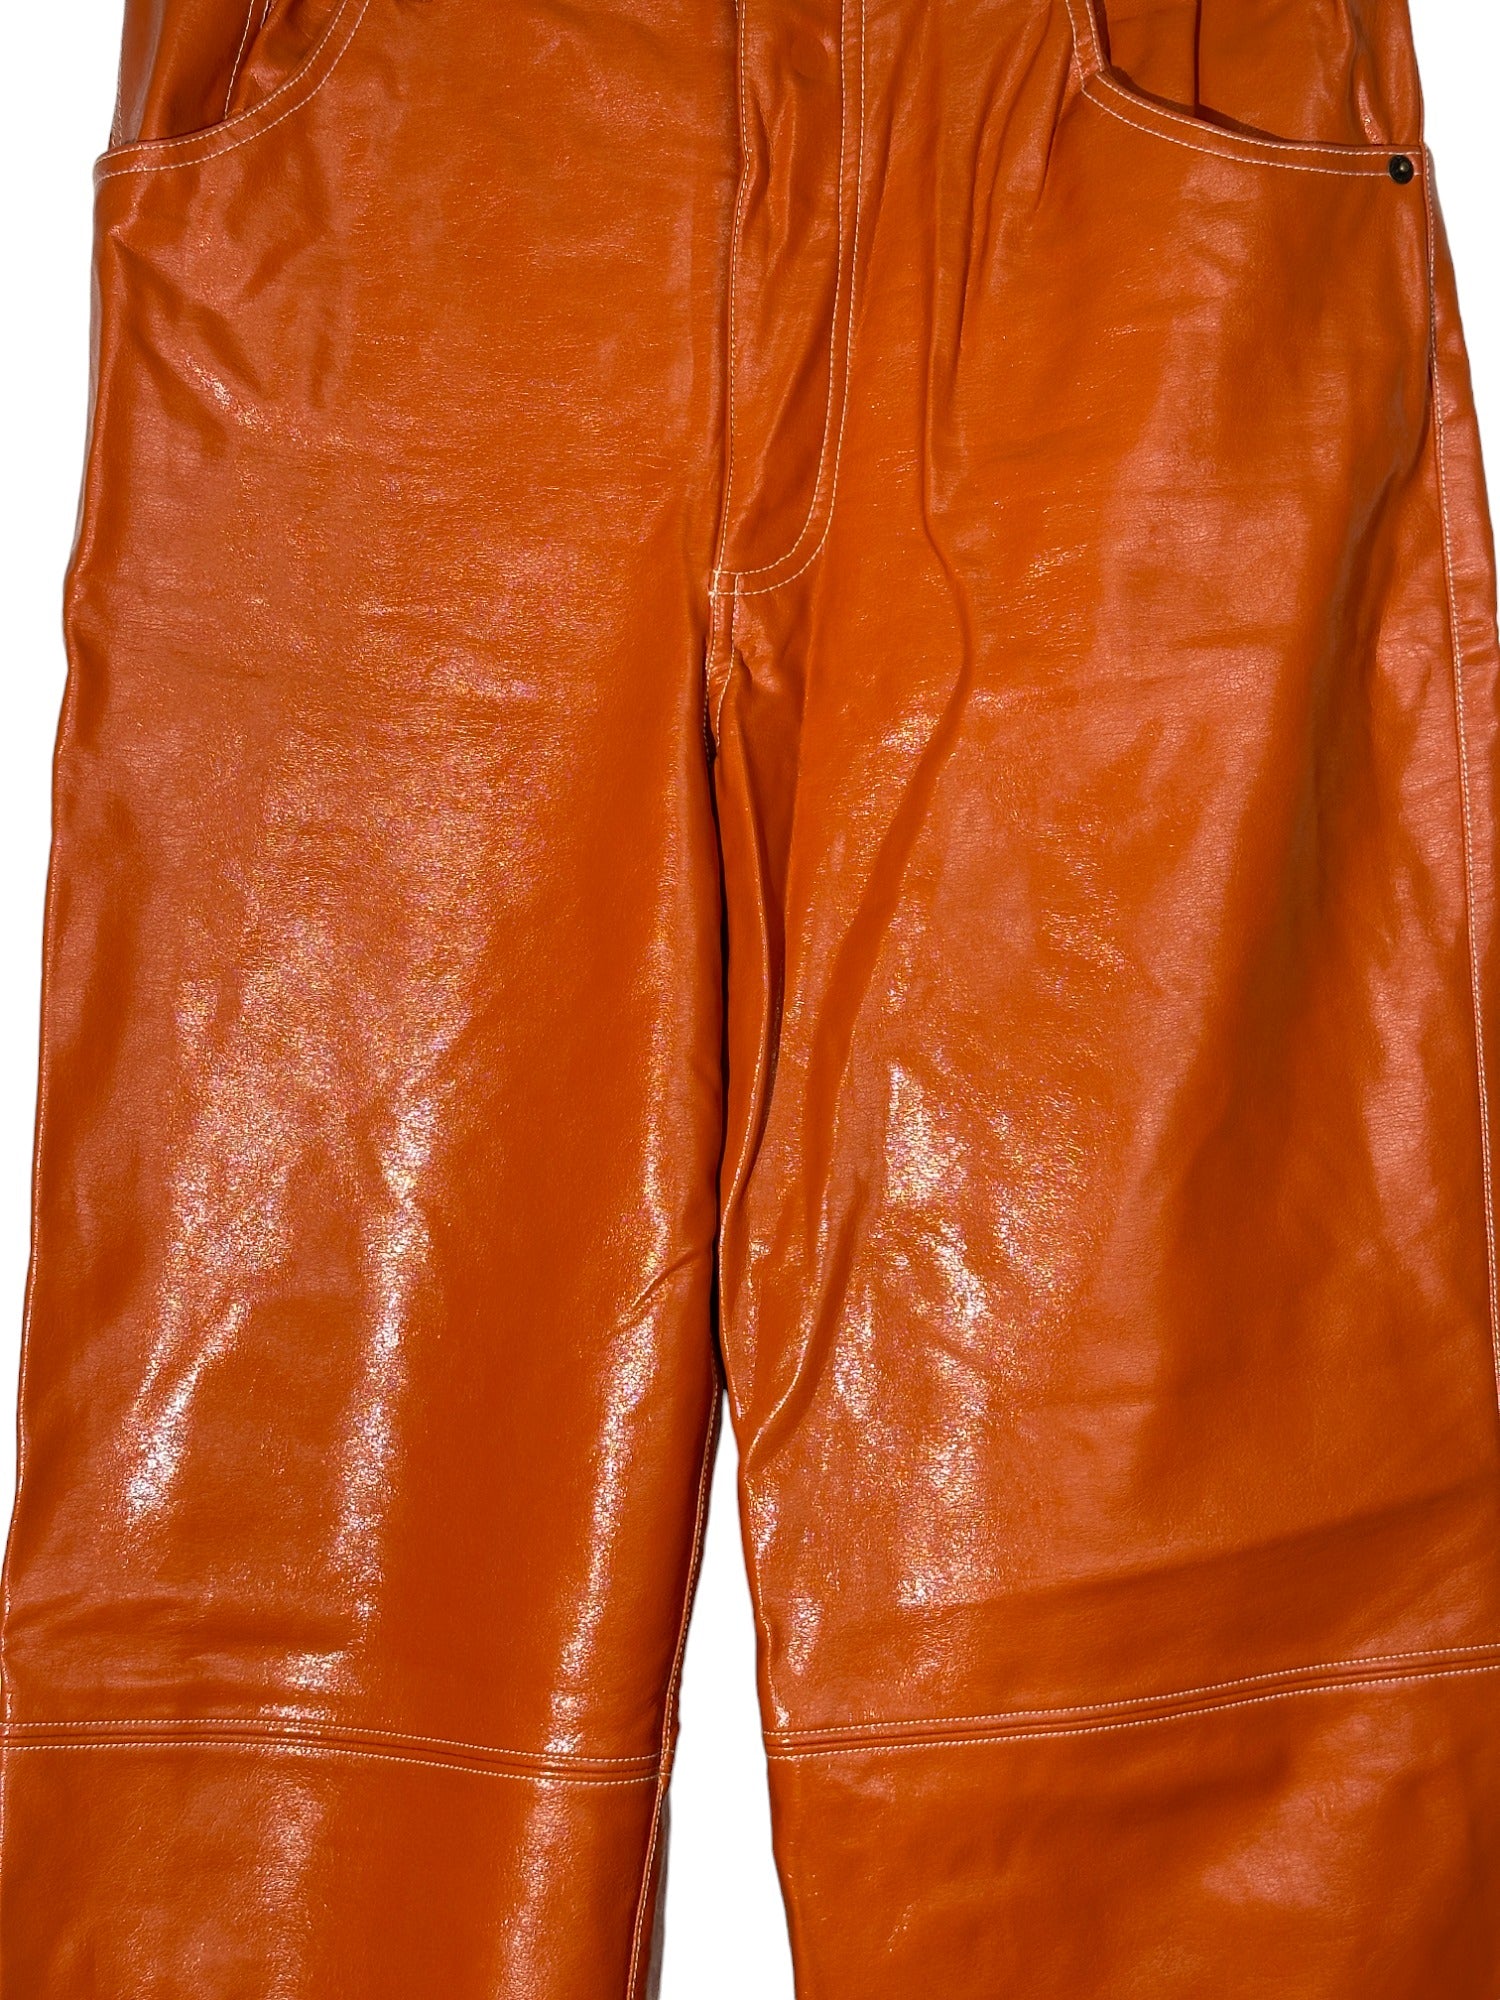 Faux Leather Bootcut Orange Pants